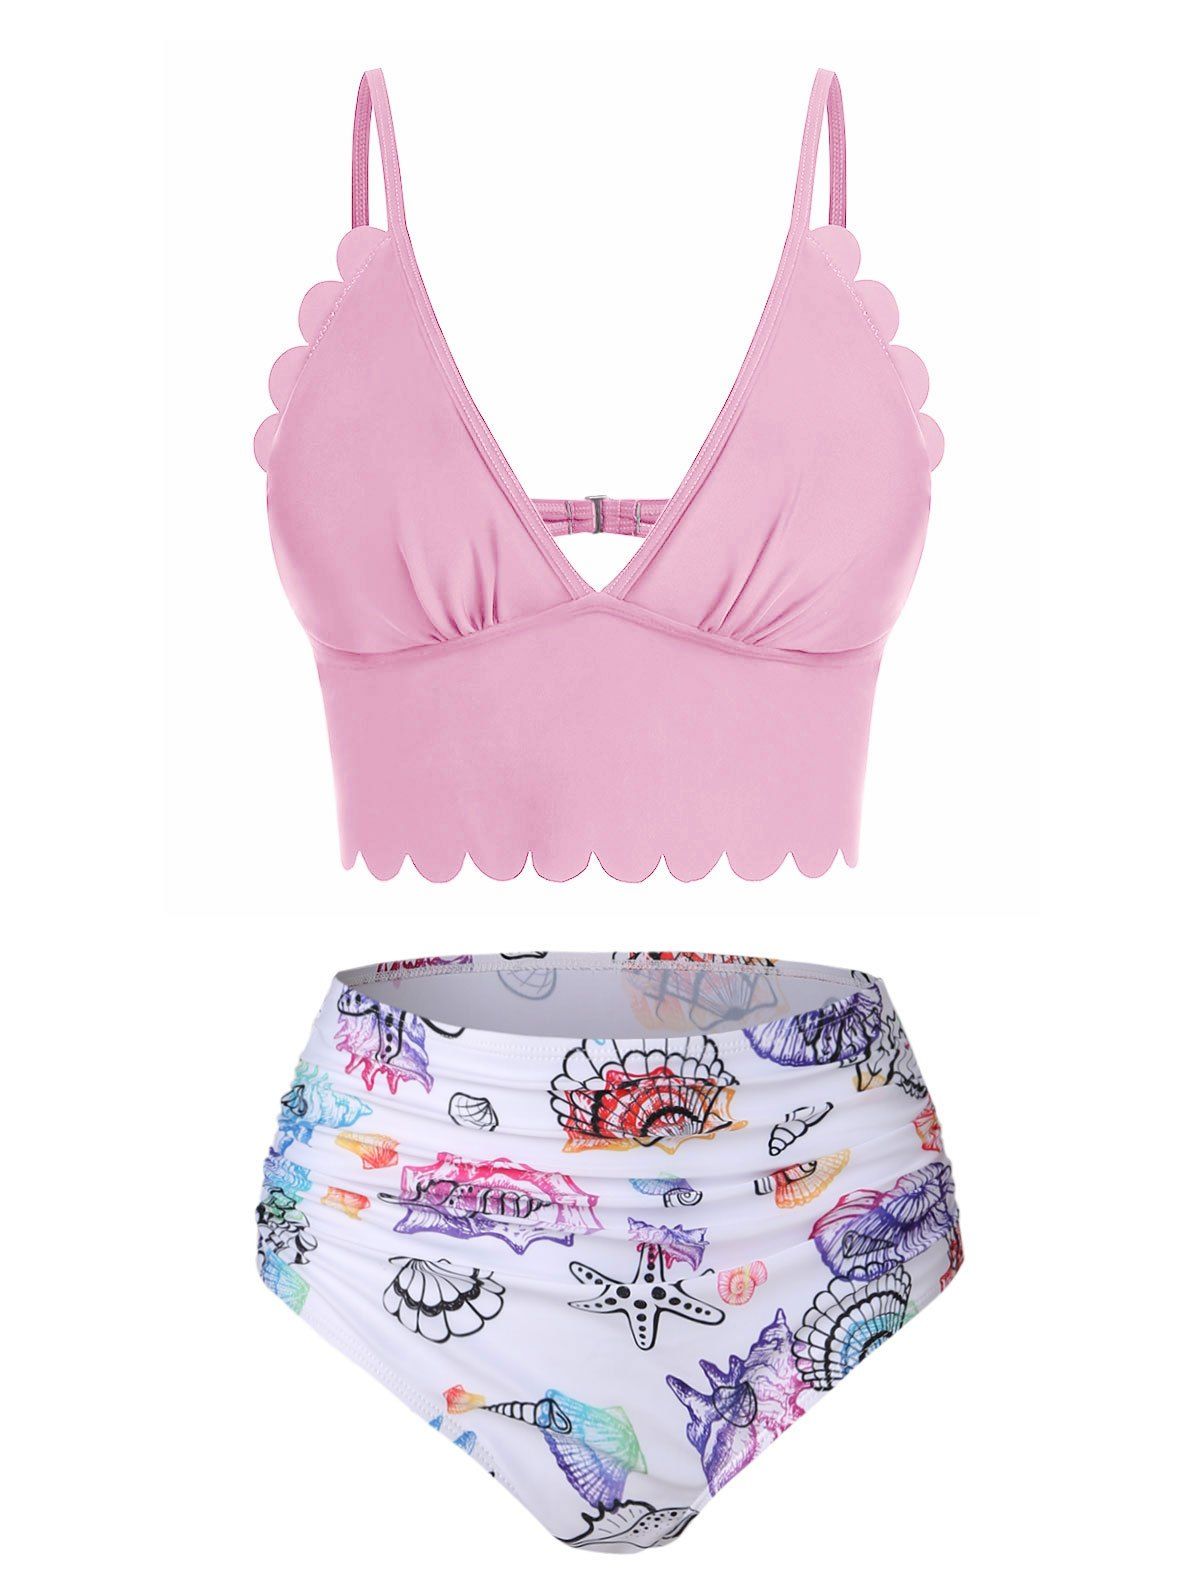 Shell Starfish Print Ruched Padded Bikini Set - LIGHT PINK L